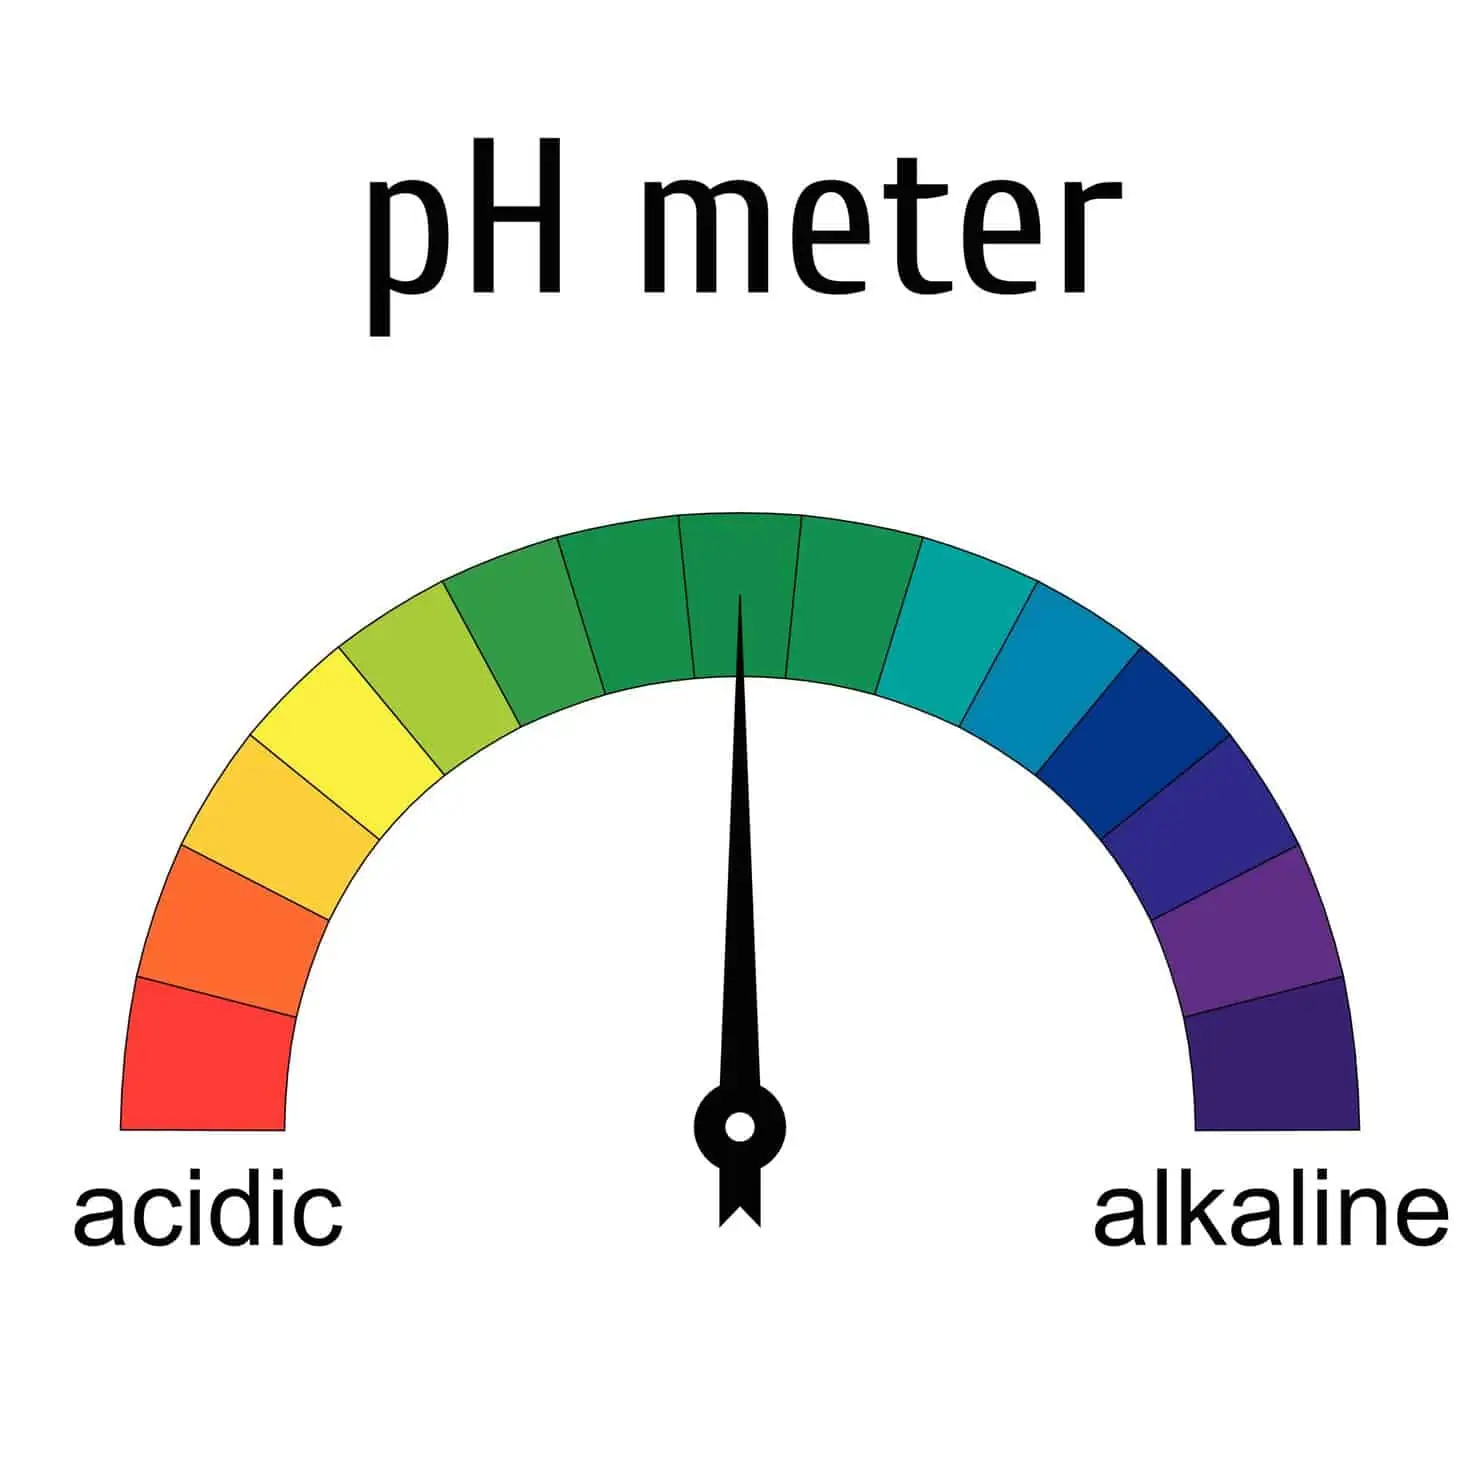 ph meter cannabis plants